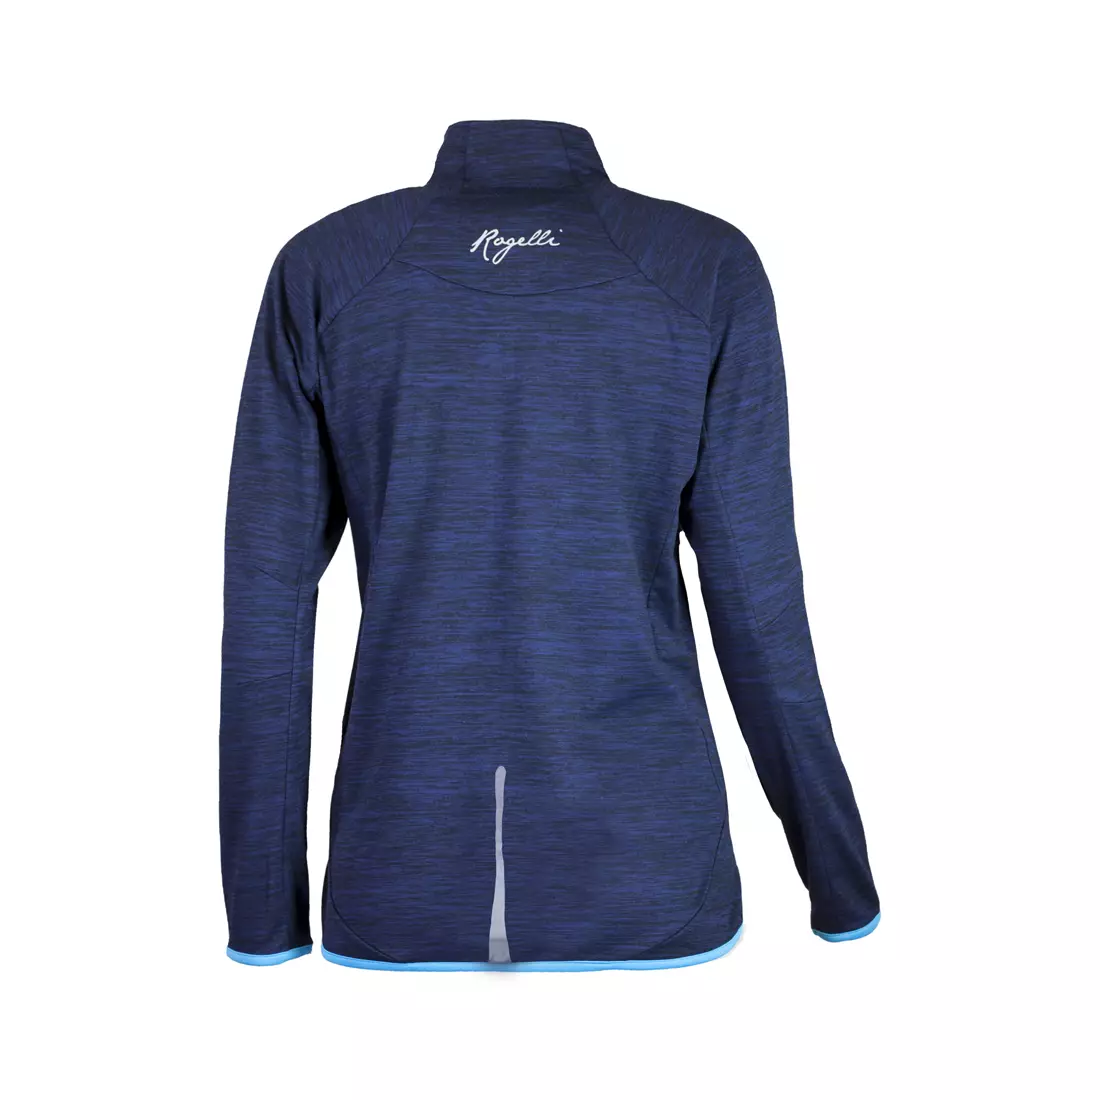 ROGELLI RUN BRIGHT 840.664 - dámské běžecké tričko s dlouhým rukávem, modrá melanž